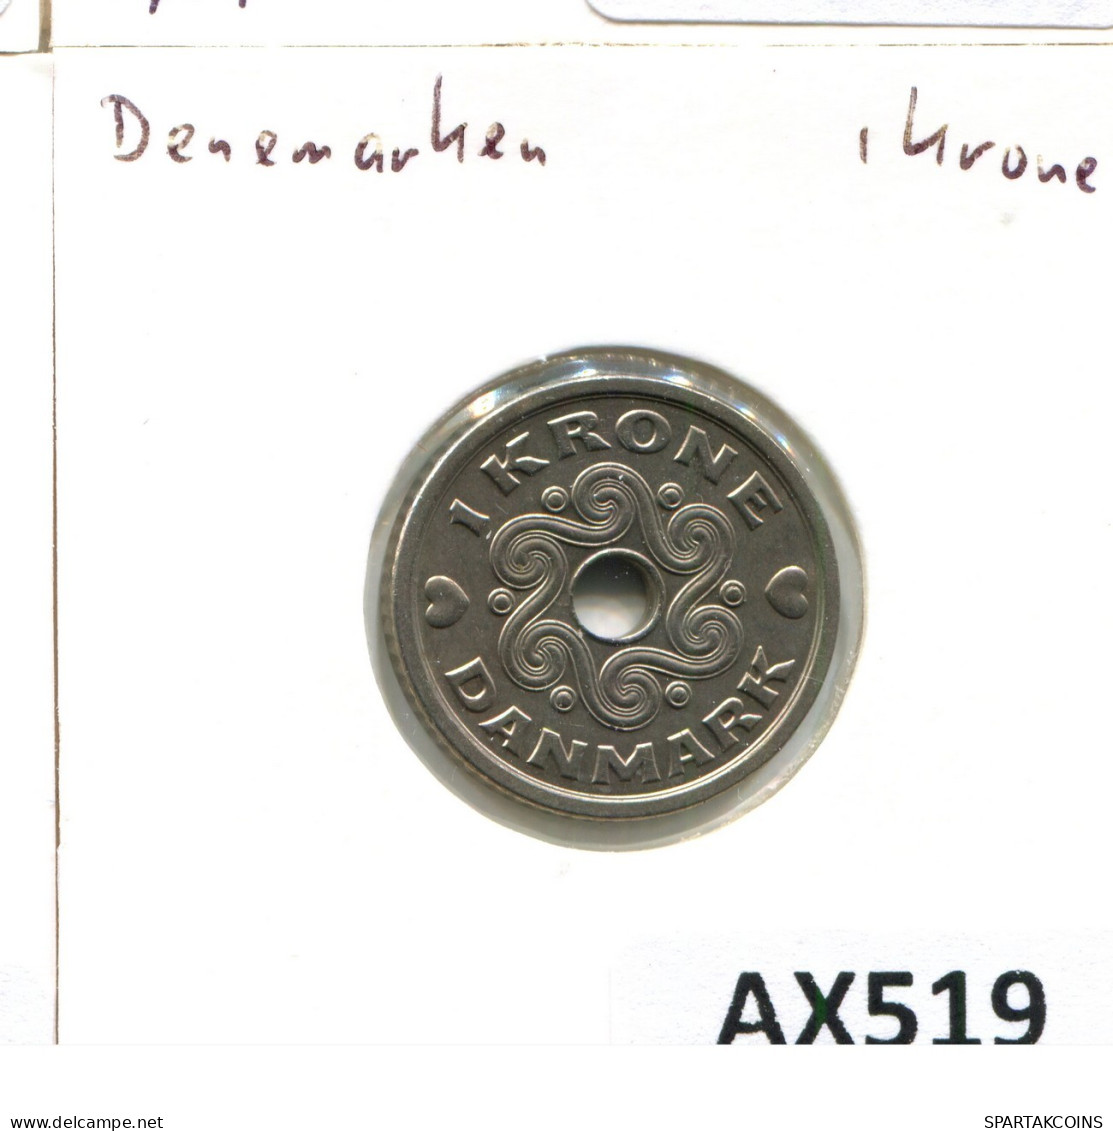 1 KRONE 1992 DANEMARK DENMARK Münze Margrethe II #AX519.D.A - Denmark